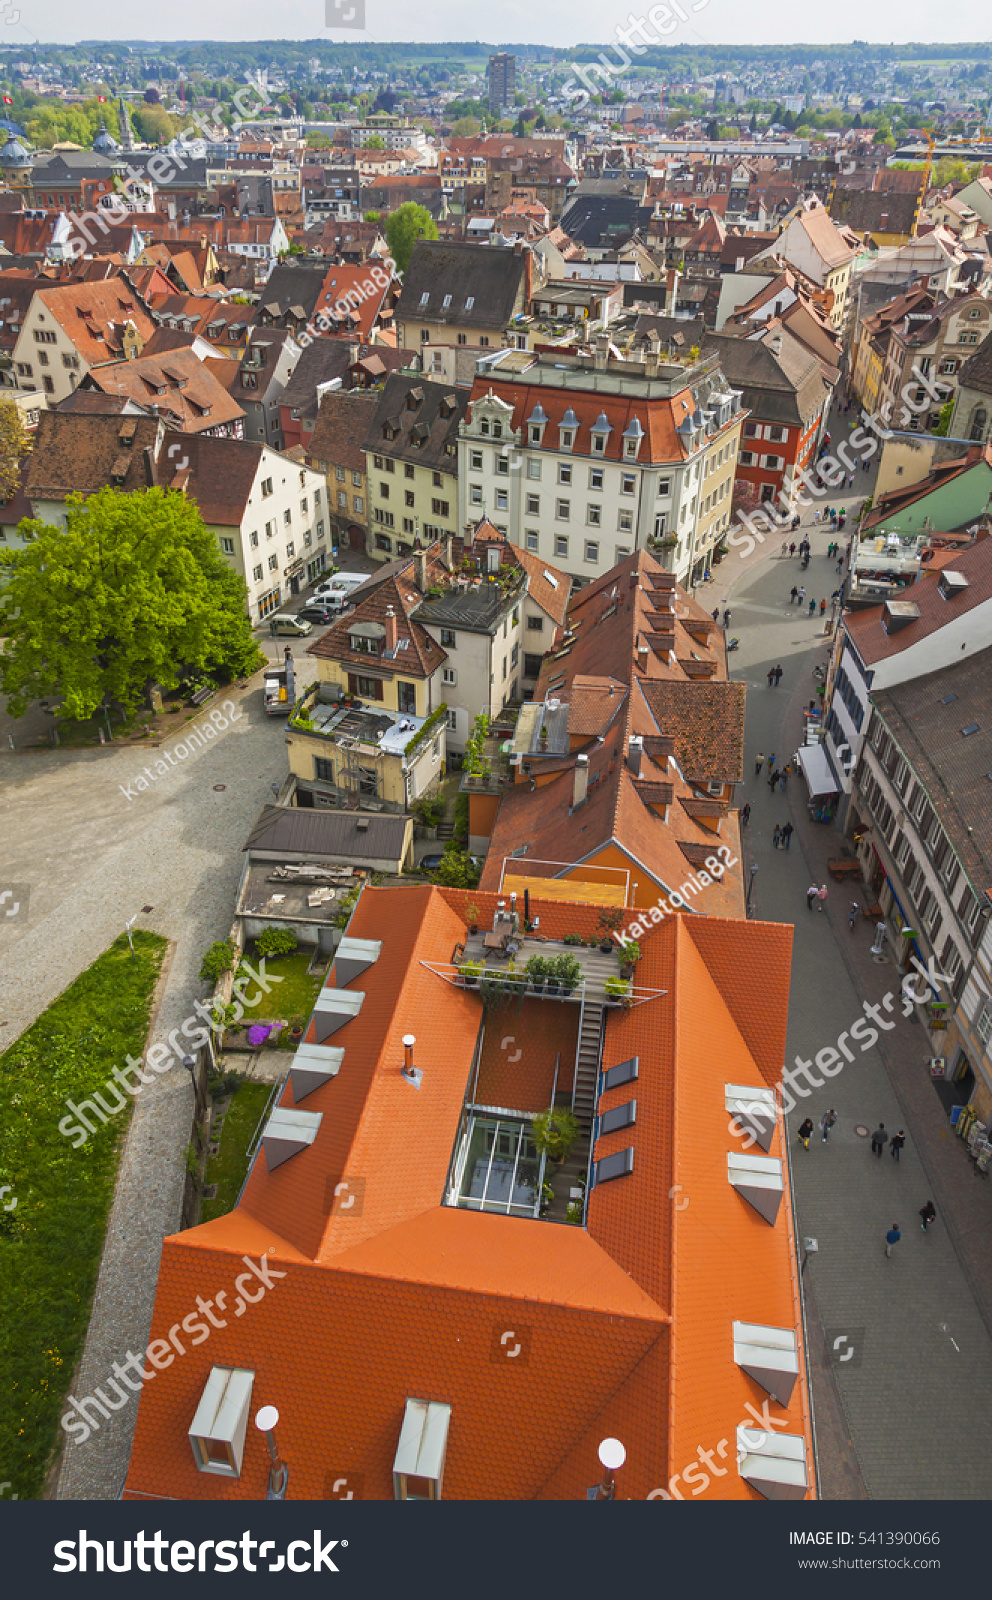 Aerial skyline view of Konstanz city, Baden-Wurttemberg state, Germany #541390066